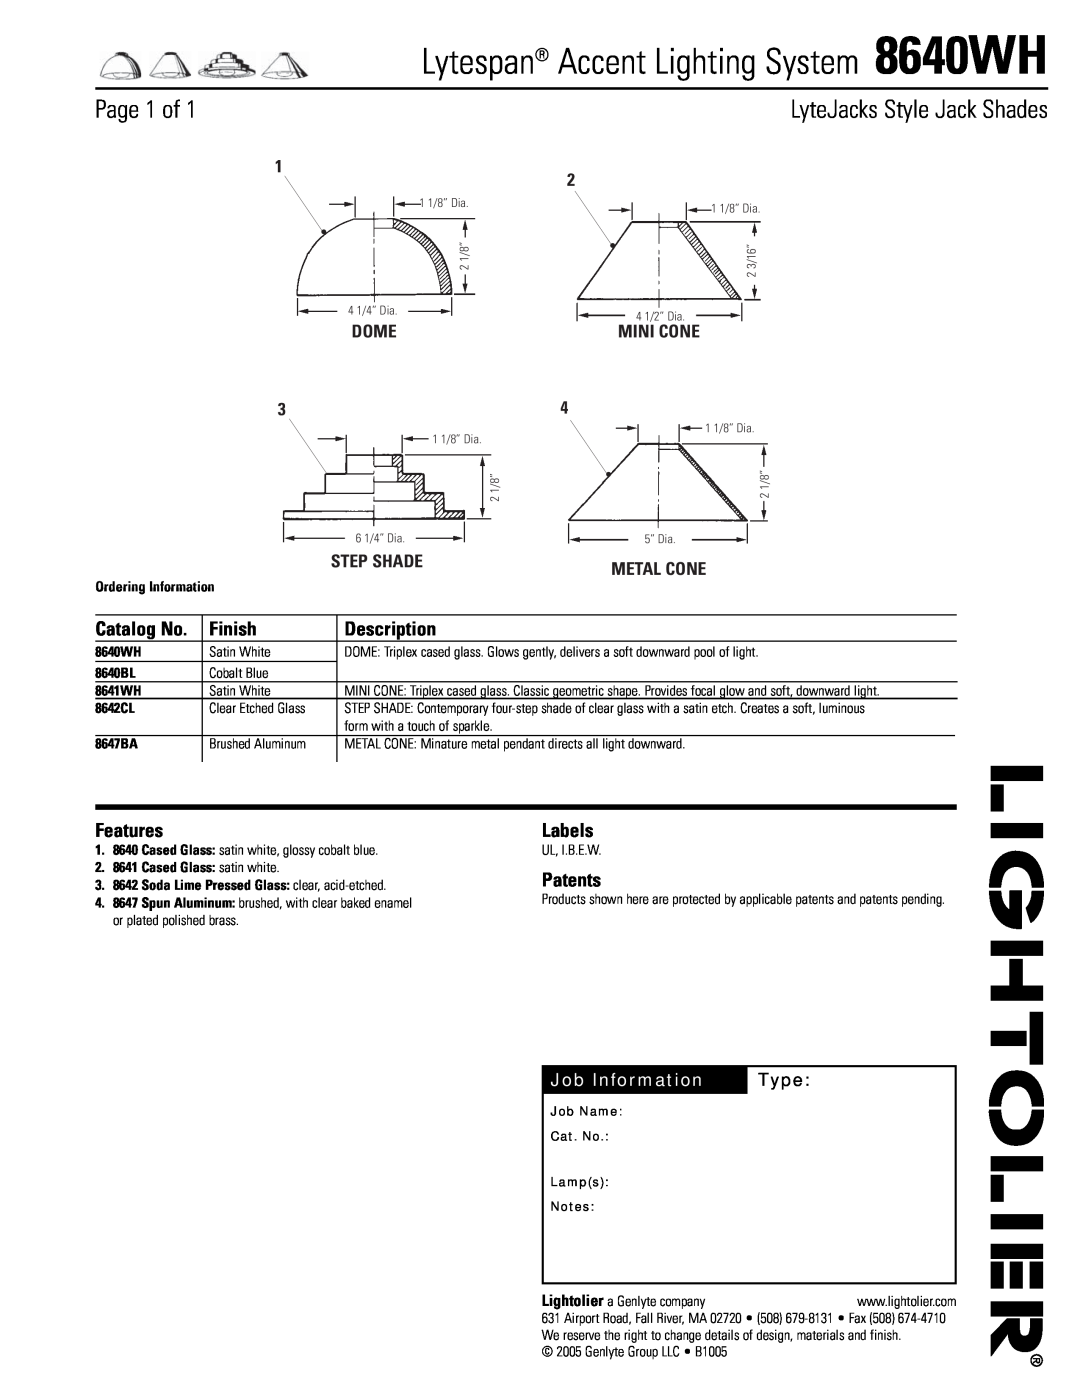 Lightolier manual Lytespan Accent Lighting System 8640WH, Page 1 of, LyteJacks Style Jack Shades, Finish, Description 